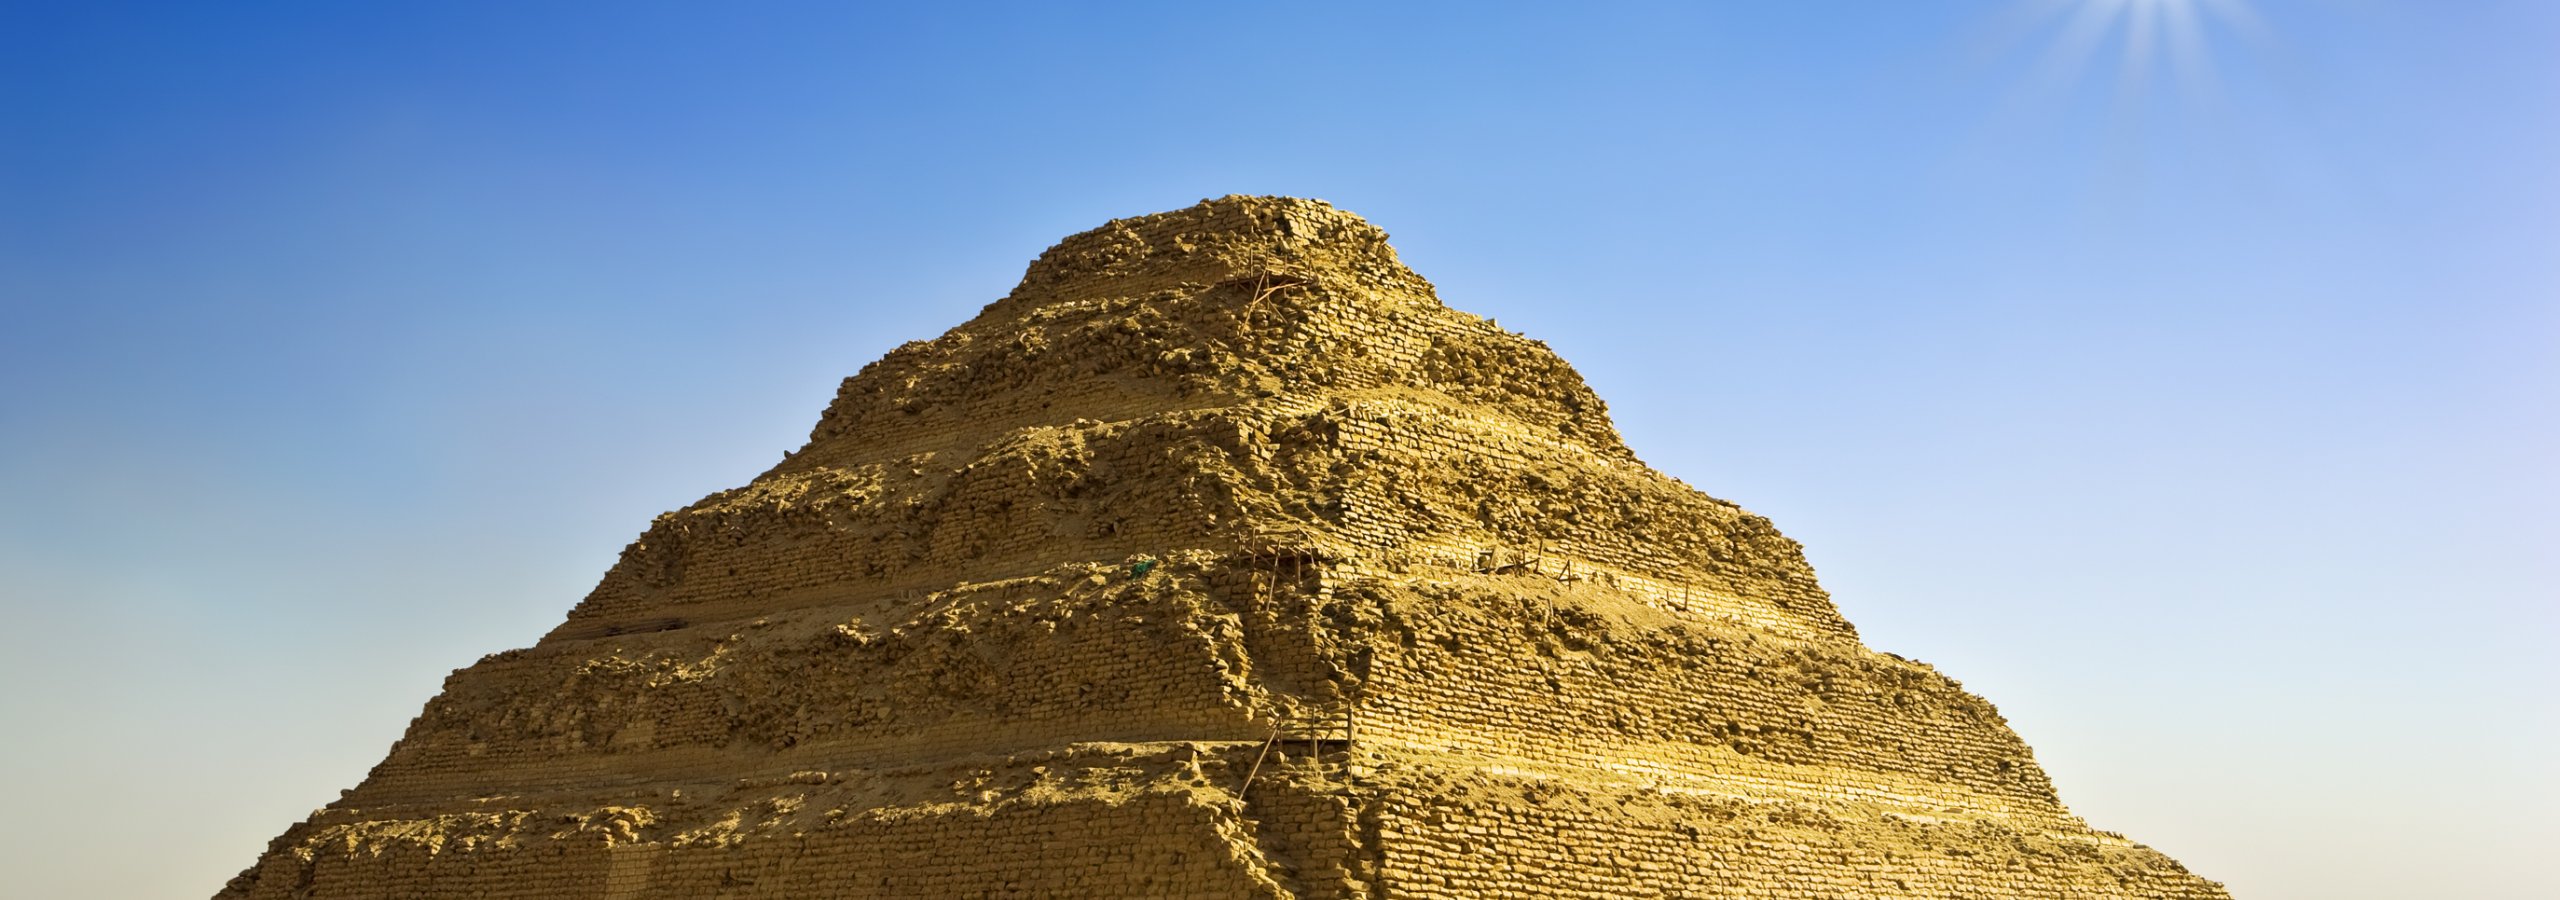 the step pyramid of king djoser Sakkara egypt2